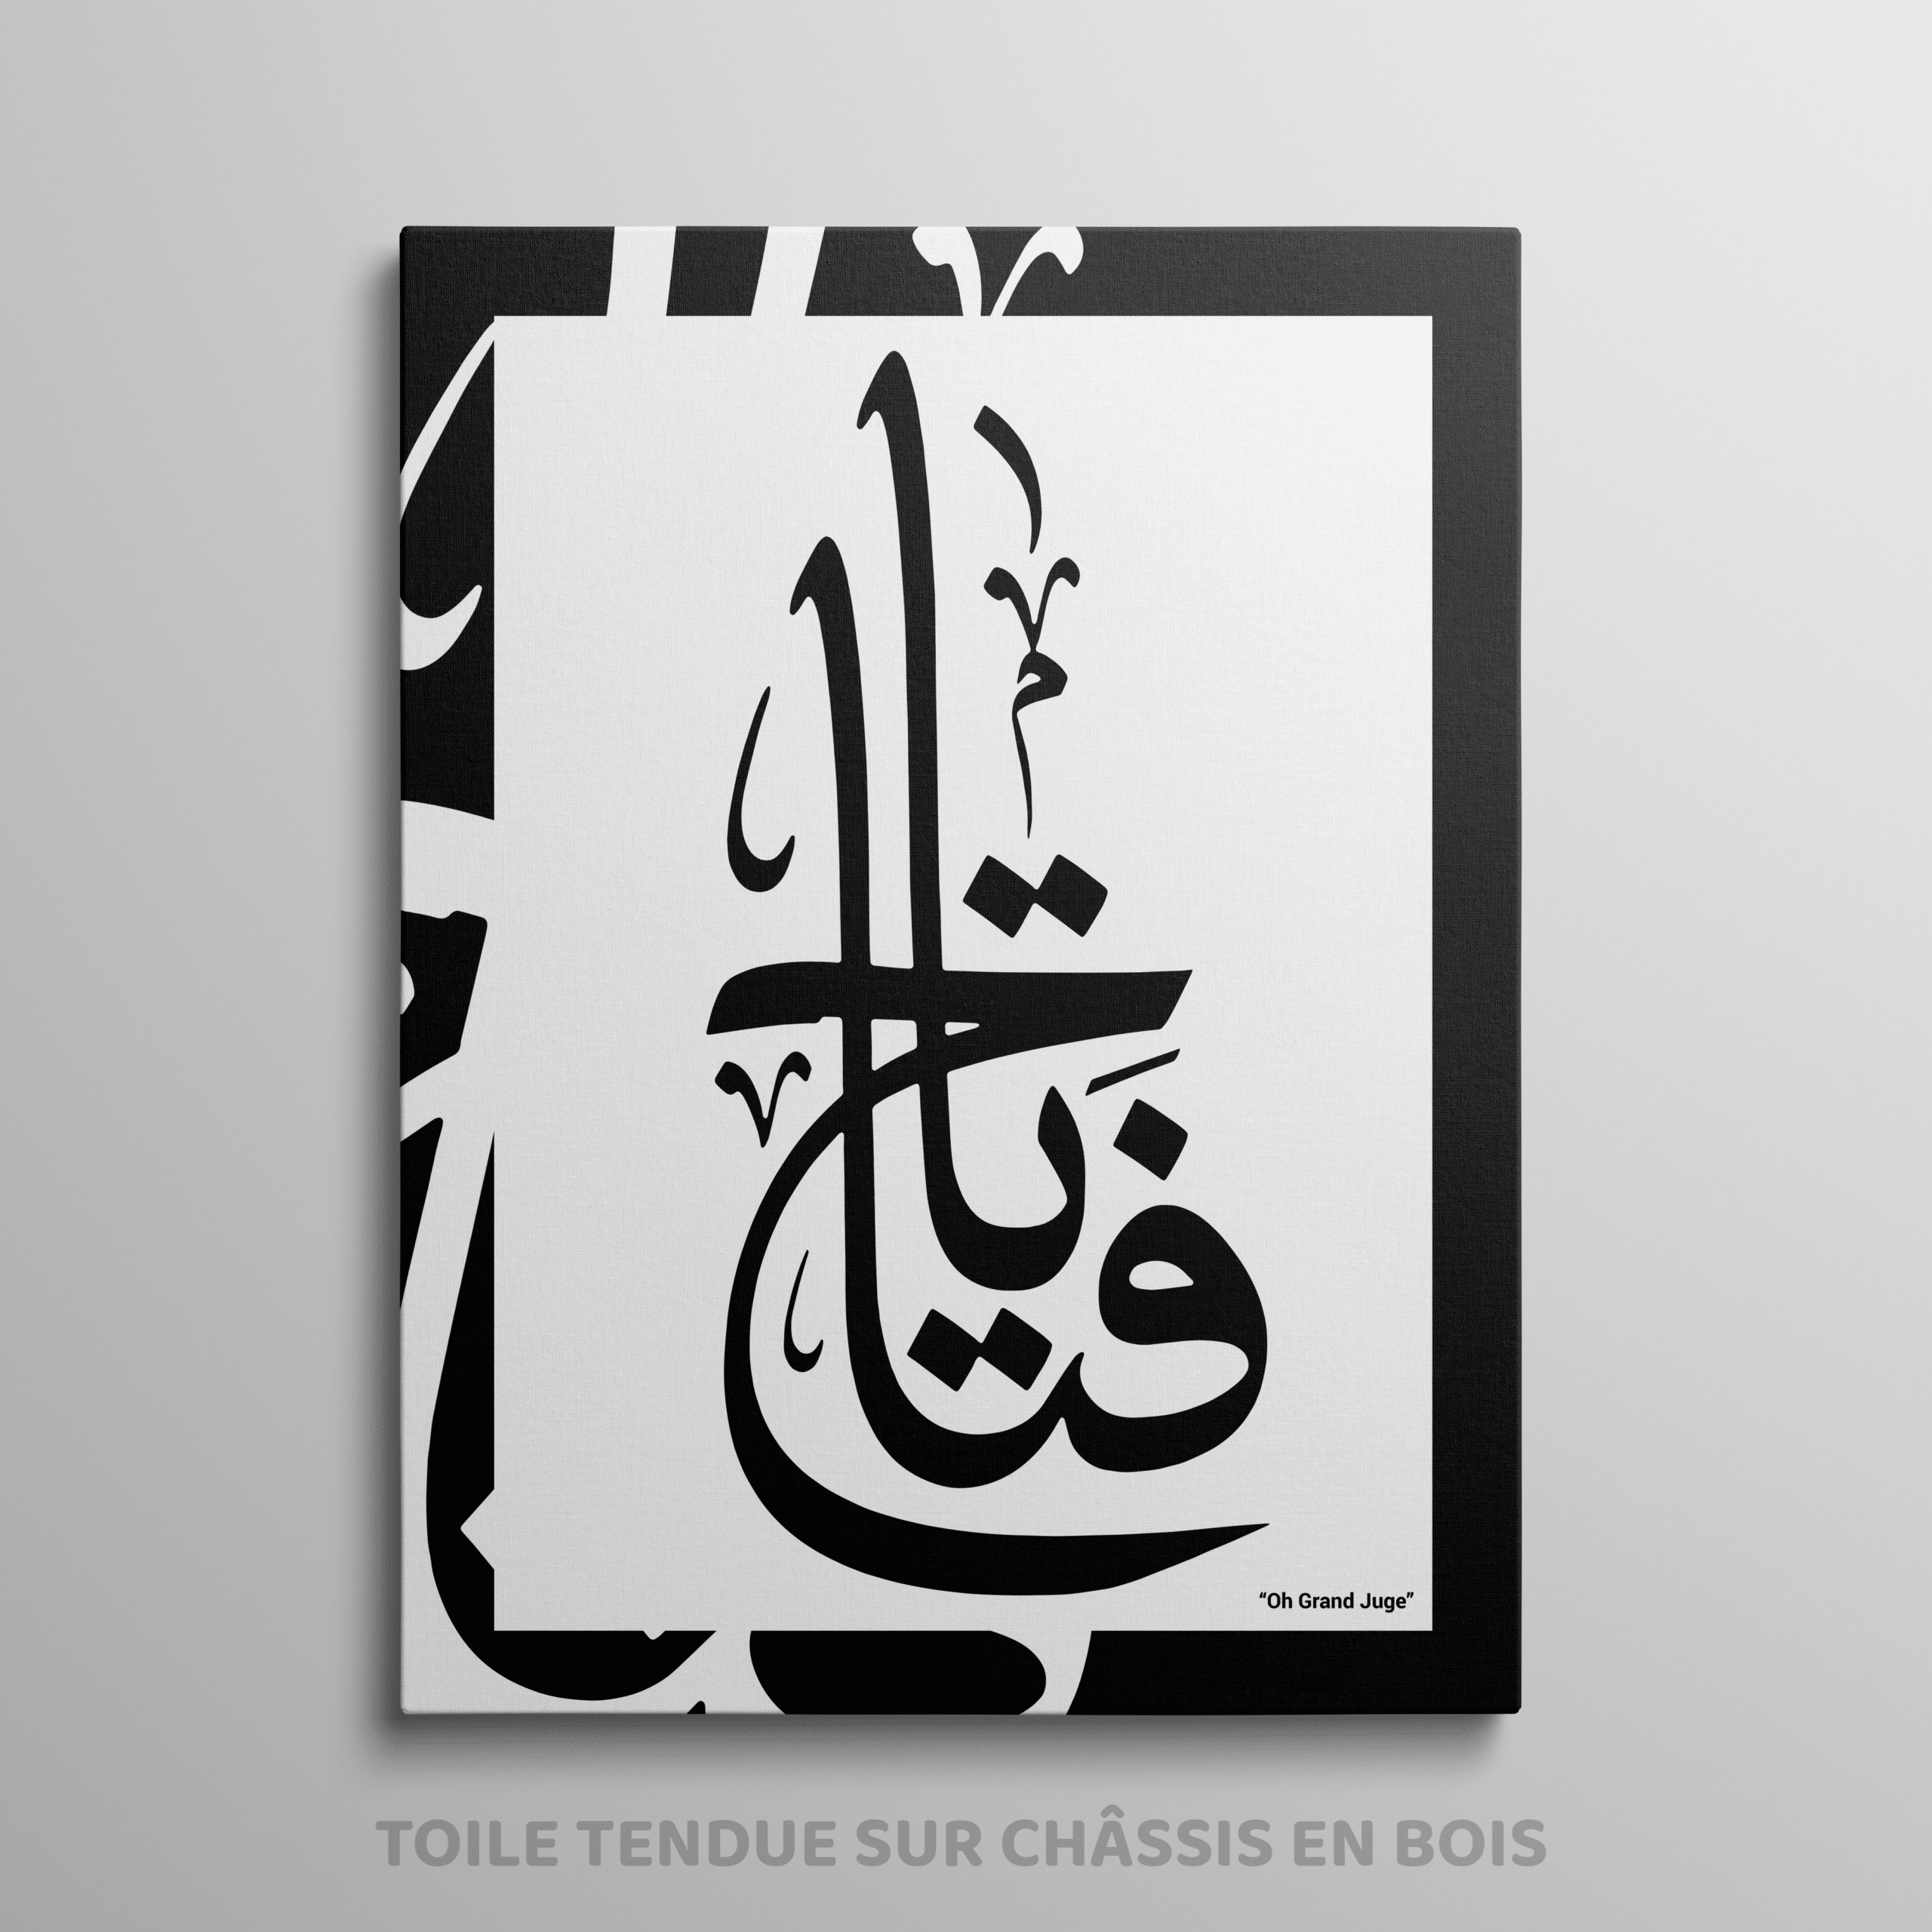 Tableau islam calligraphie – Décoration Oriental